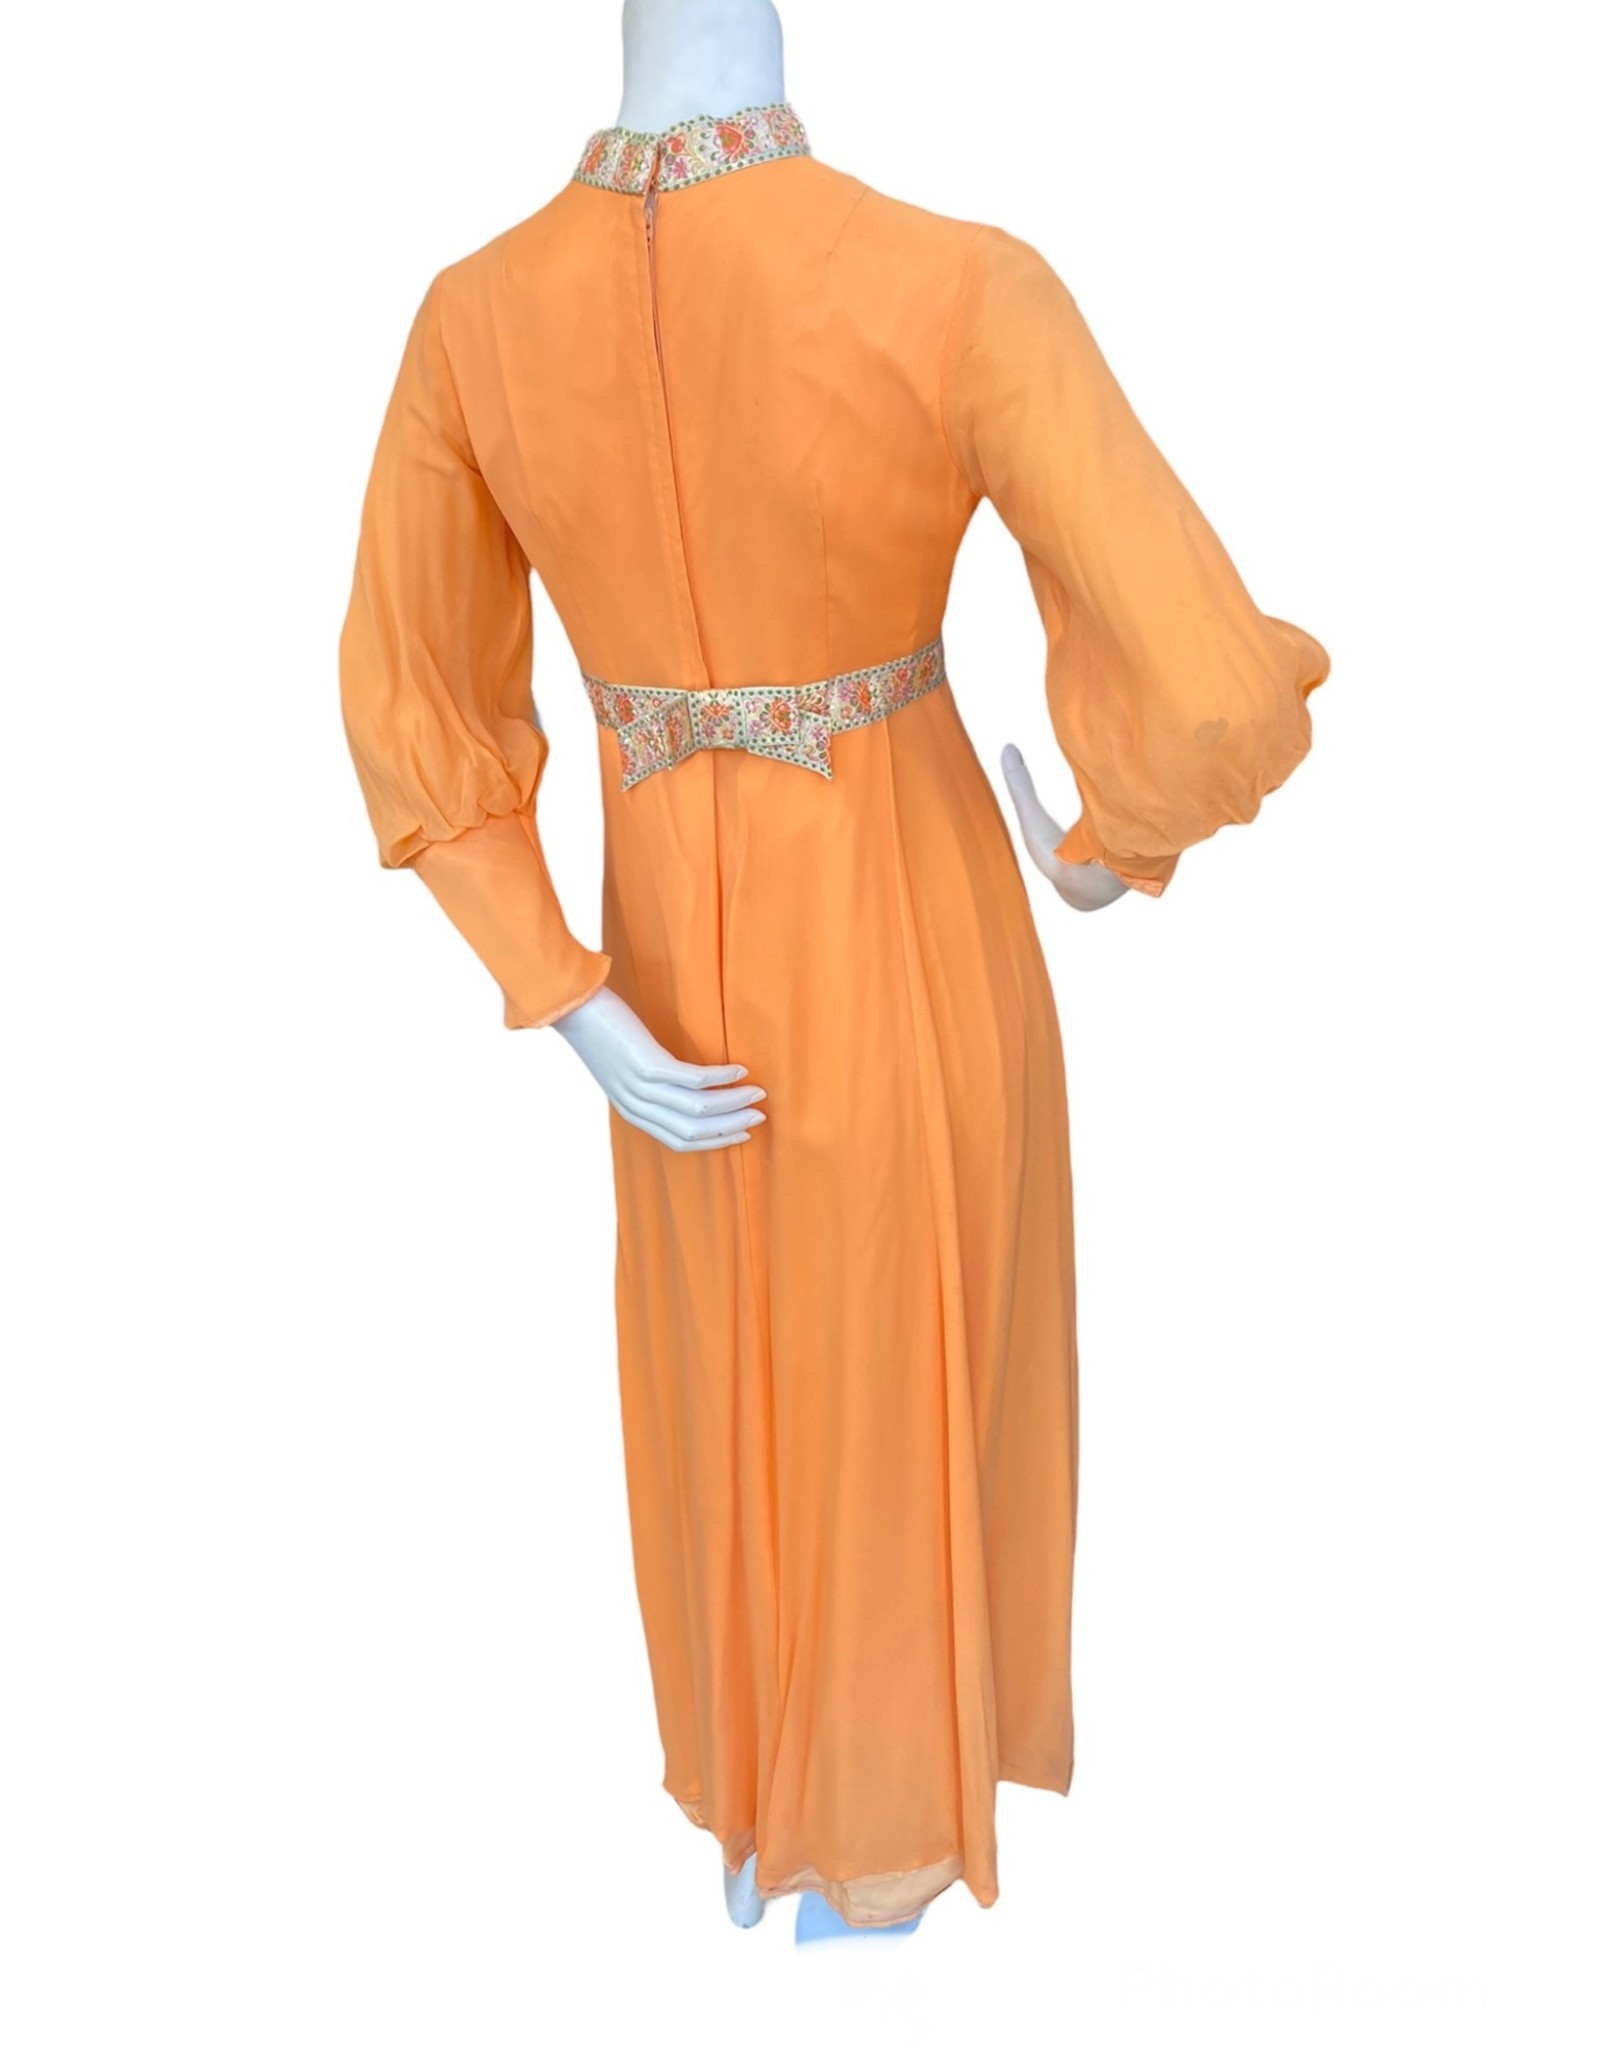 Angelair by Monika 70s orange high waisted “pant” dress